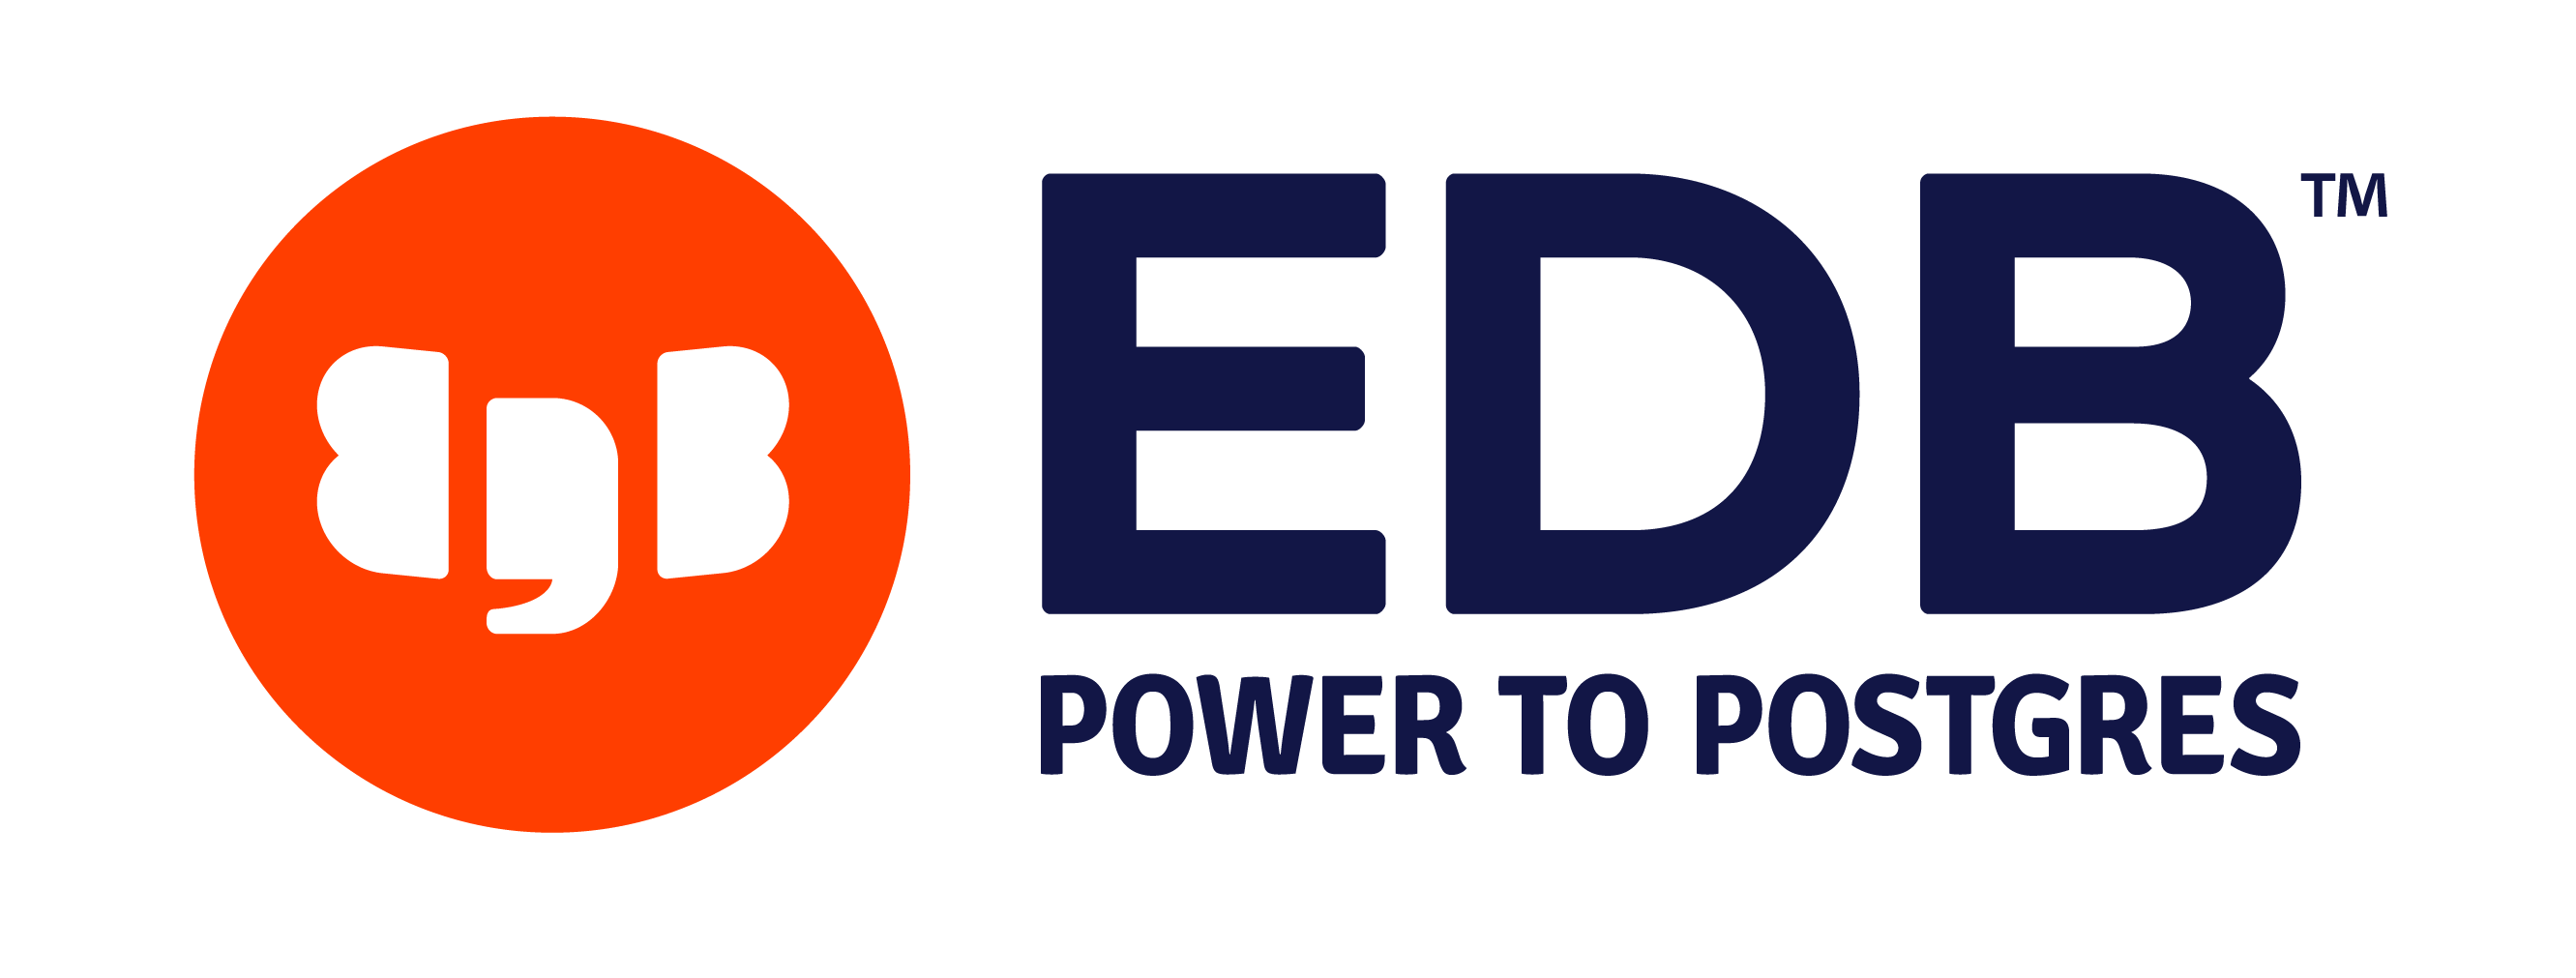 EDB_power_to_postgers-1